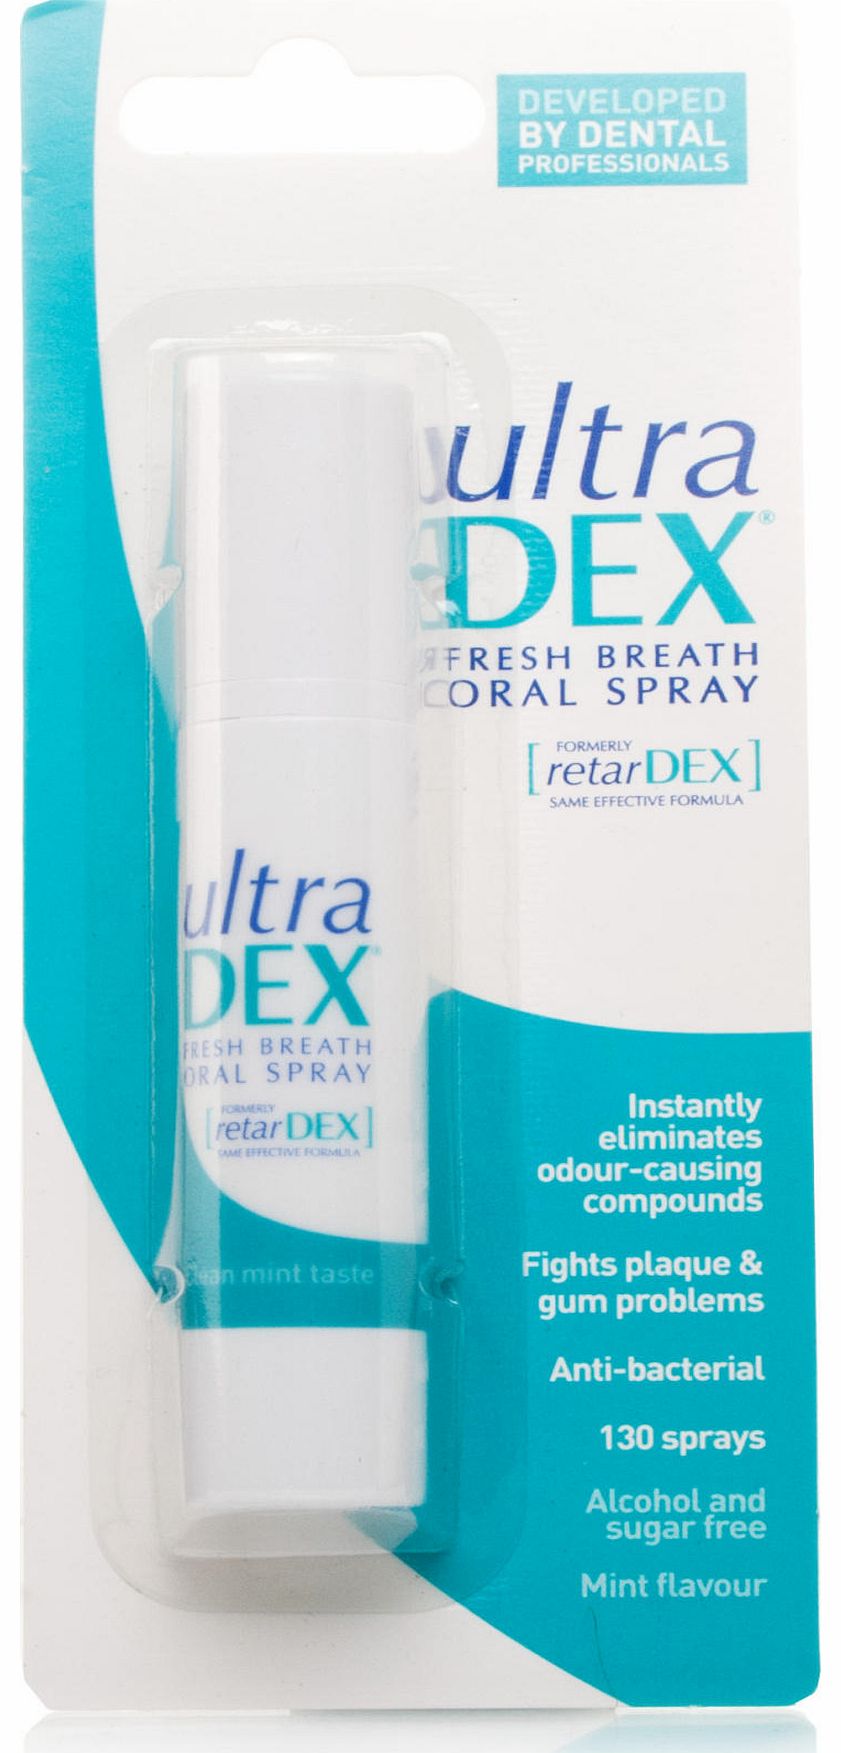 Retardex Ultradex Oral Spray (formerly Retardex Oral Spray)